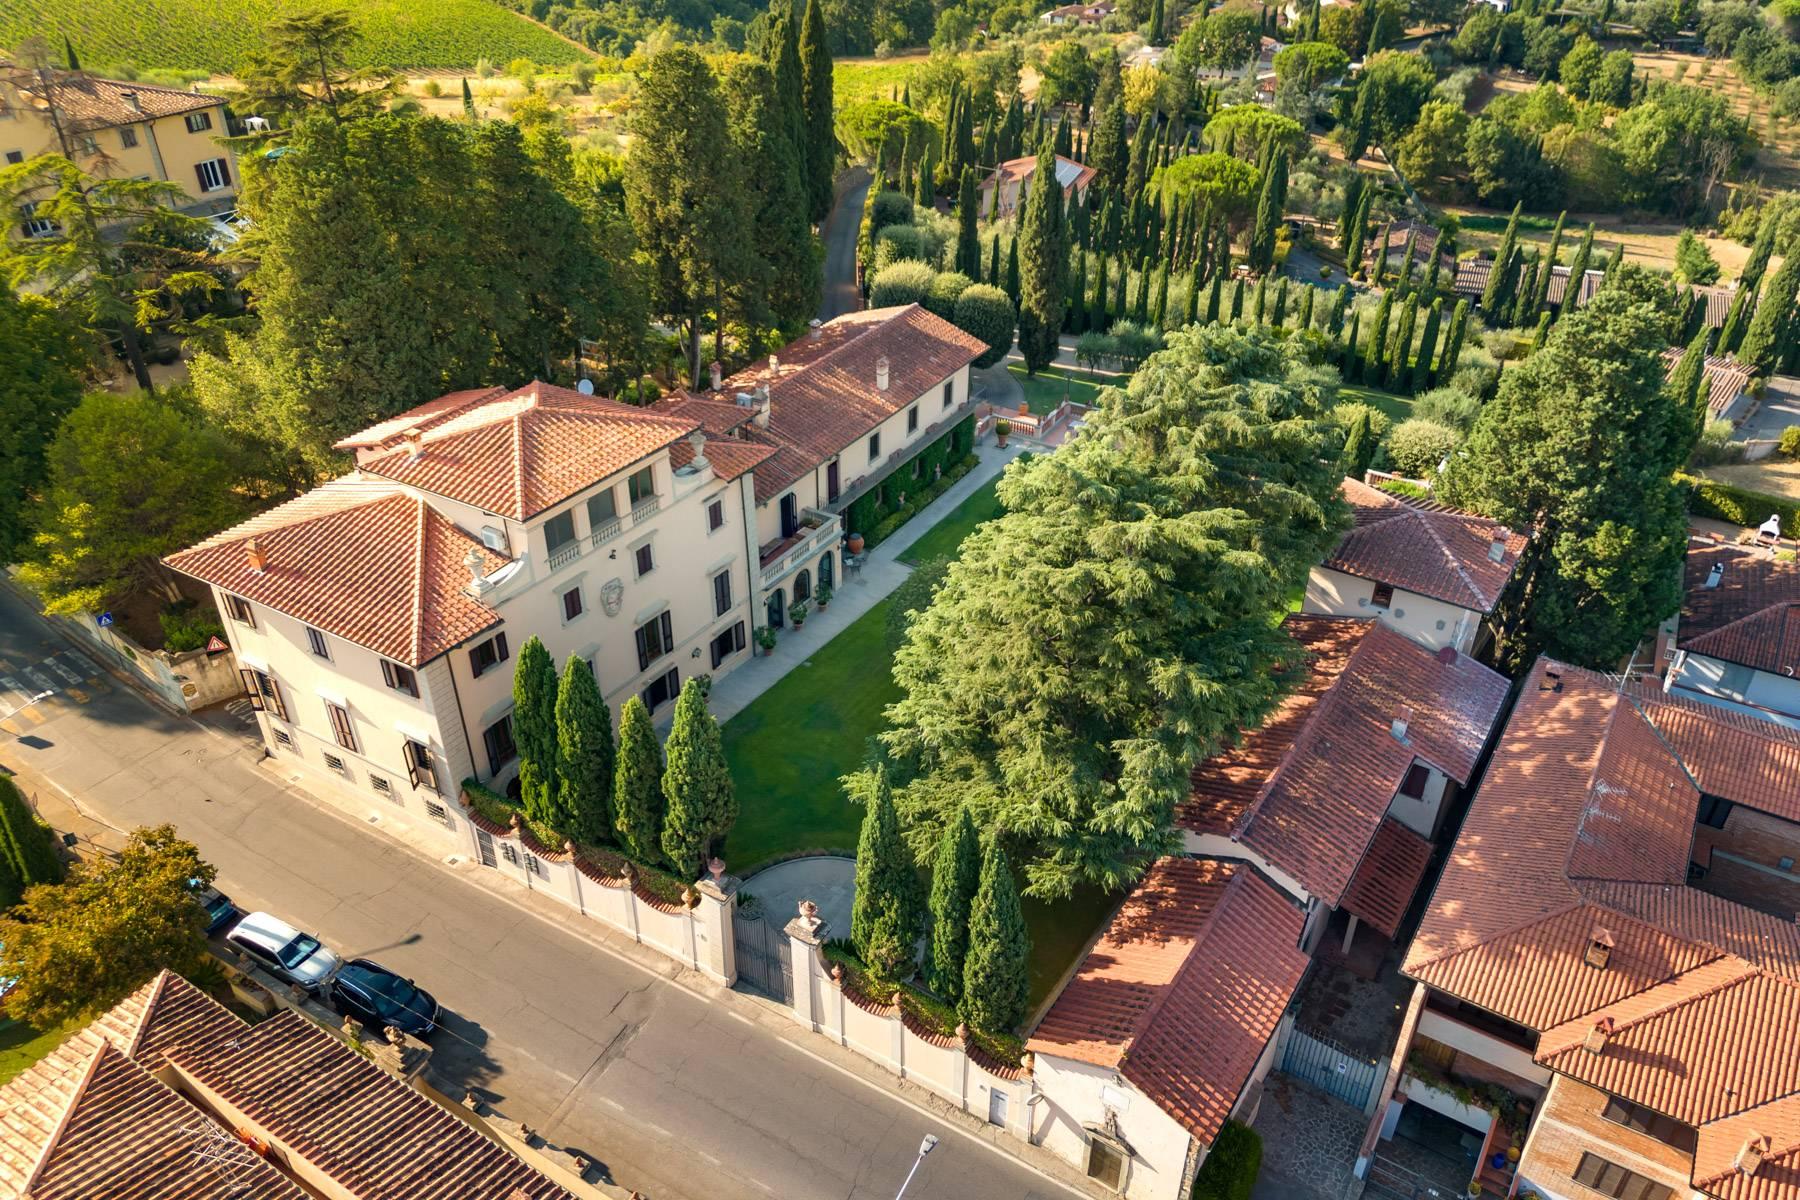 Apartment in a historic villa on the hills of Carmignano - 24